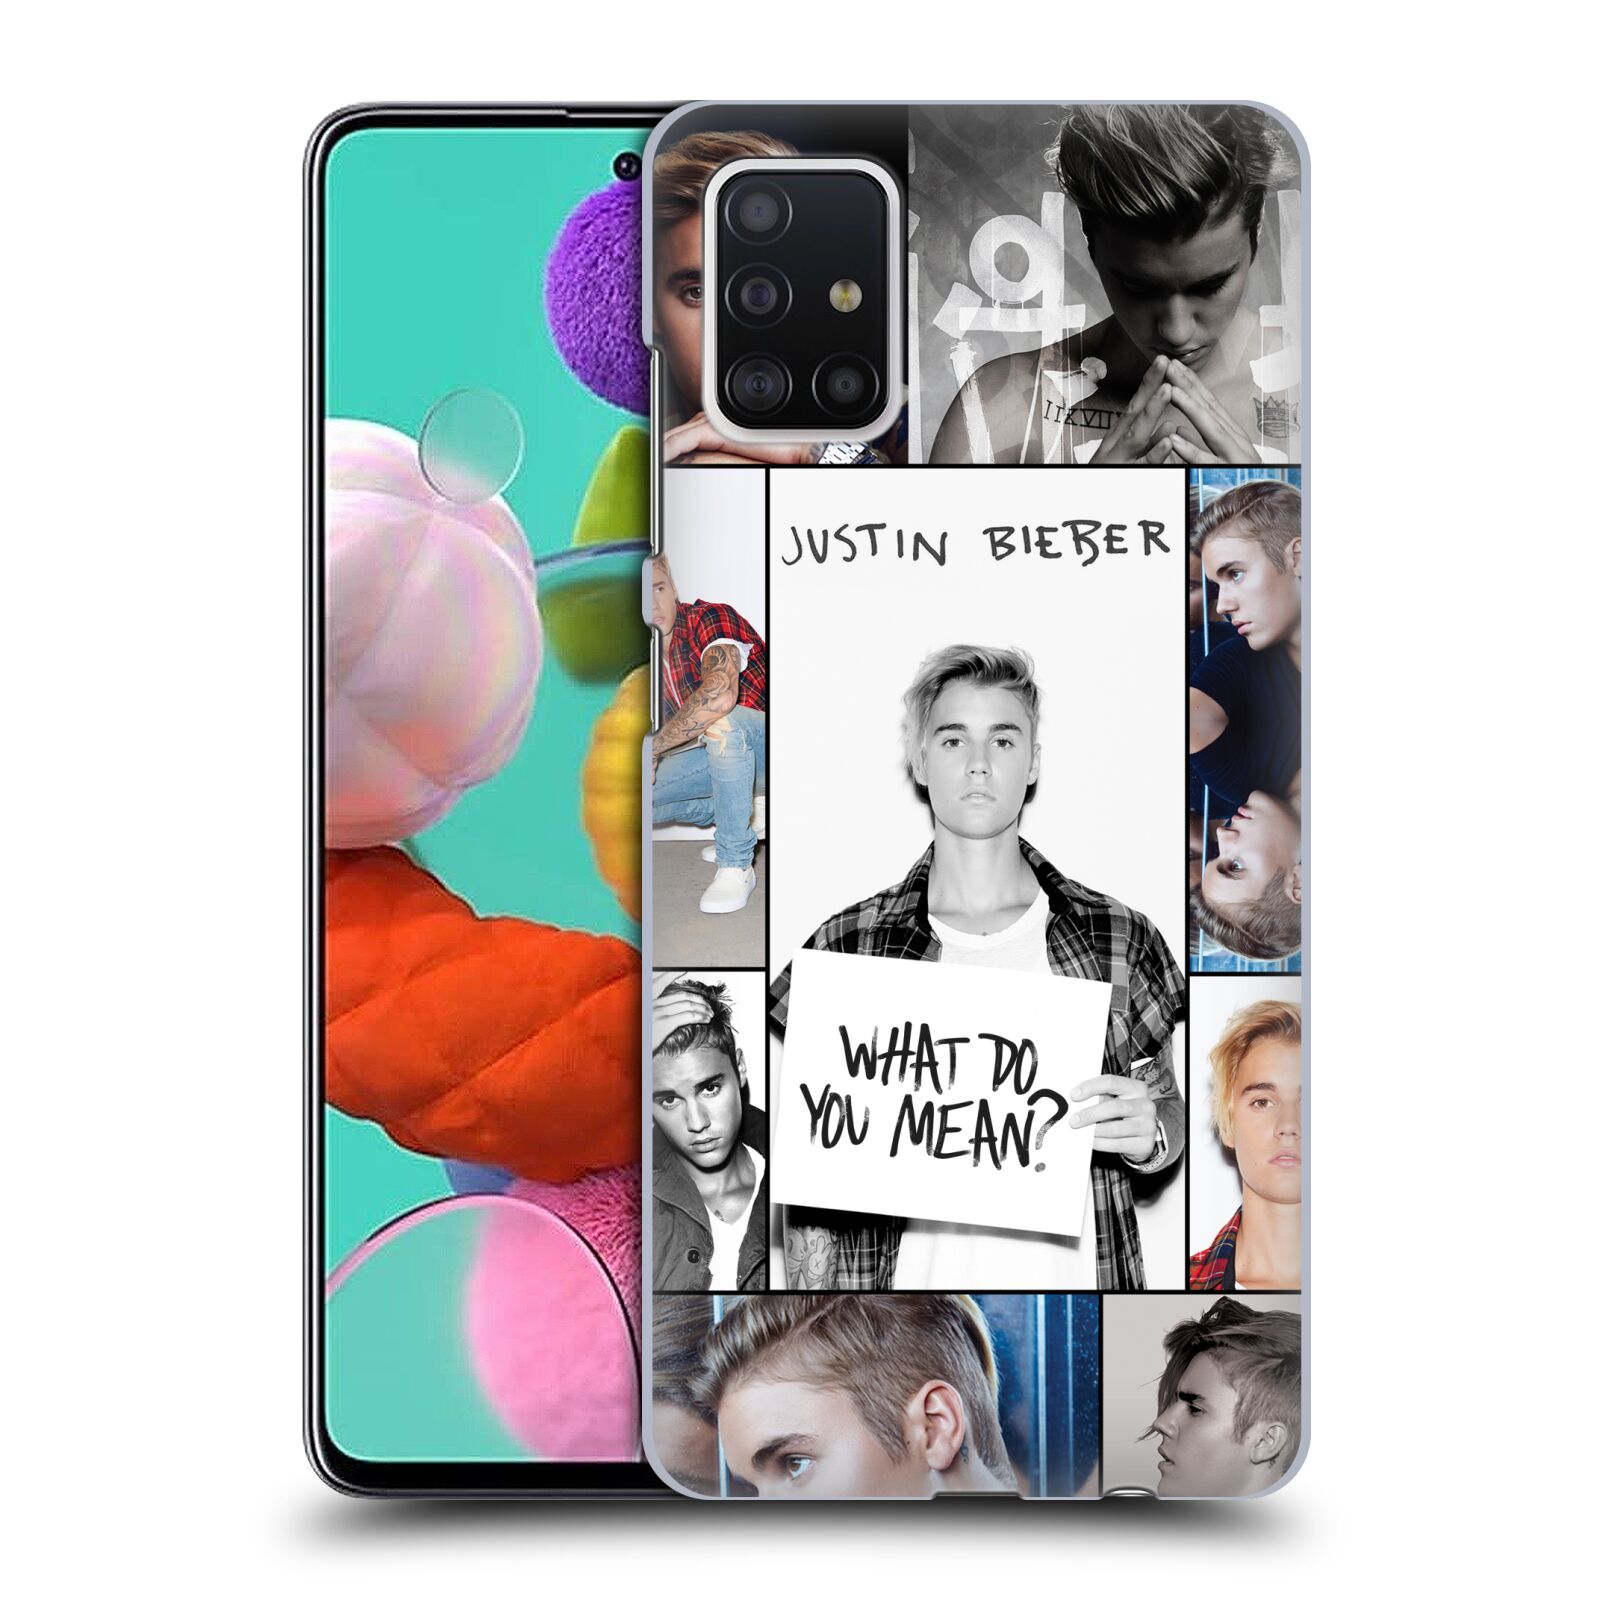 Pouzdro na mobil Samsung Galaxy A51 - HEAD CASE - Justin Bieber foto Purpose malé fotky